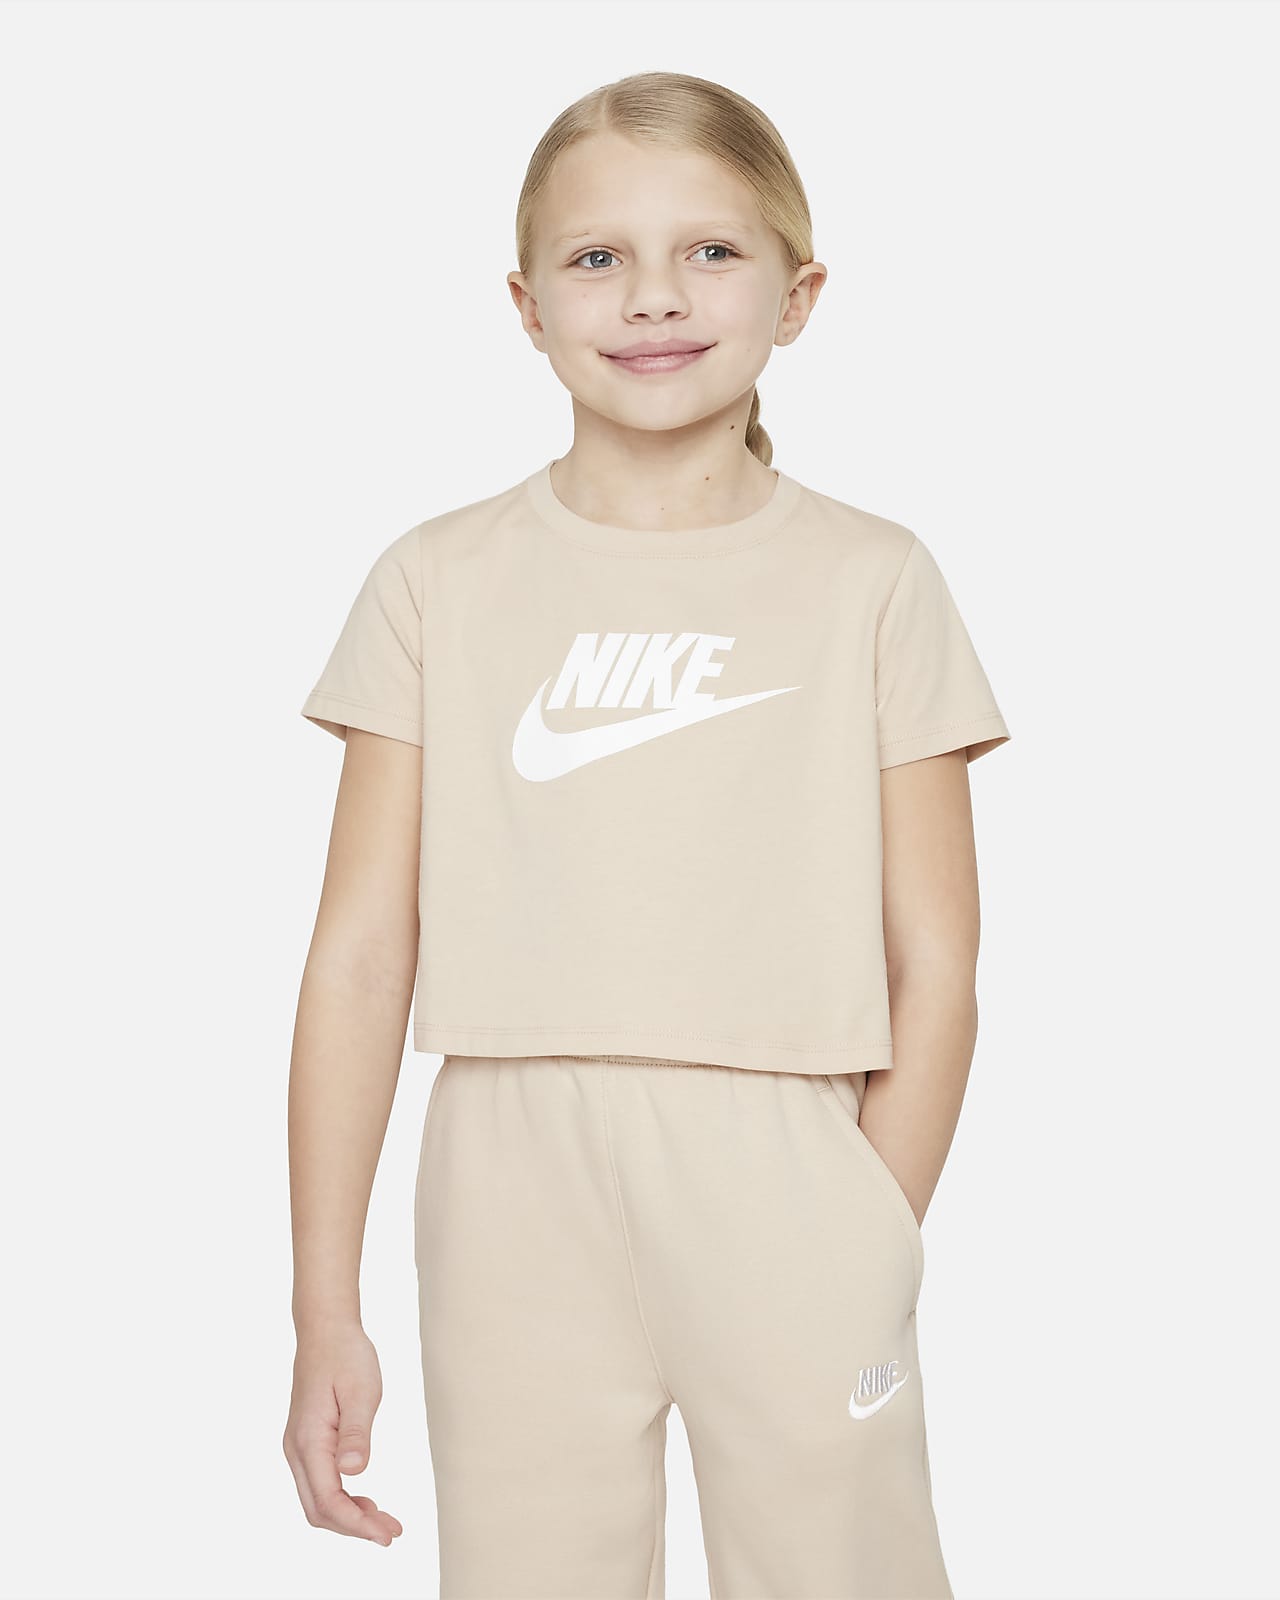 Nike sweat crop top and shorts set